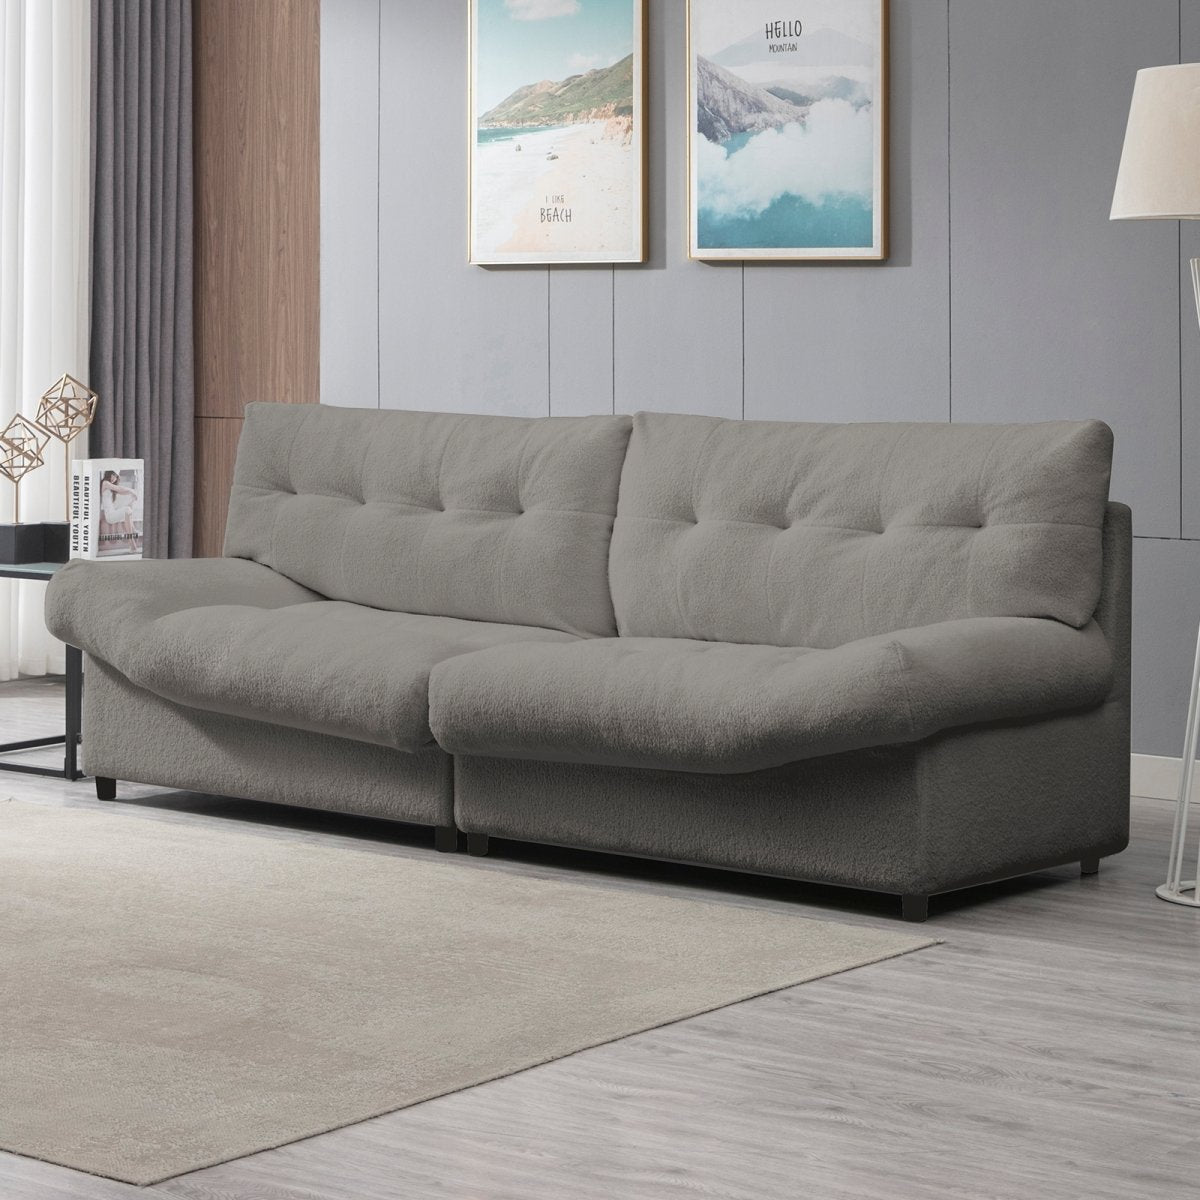 Mjkone Tufted Velvet Futon Couch Sleeper Sofa